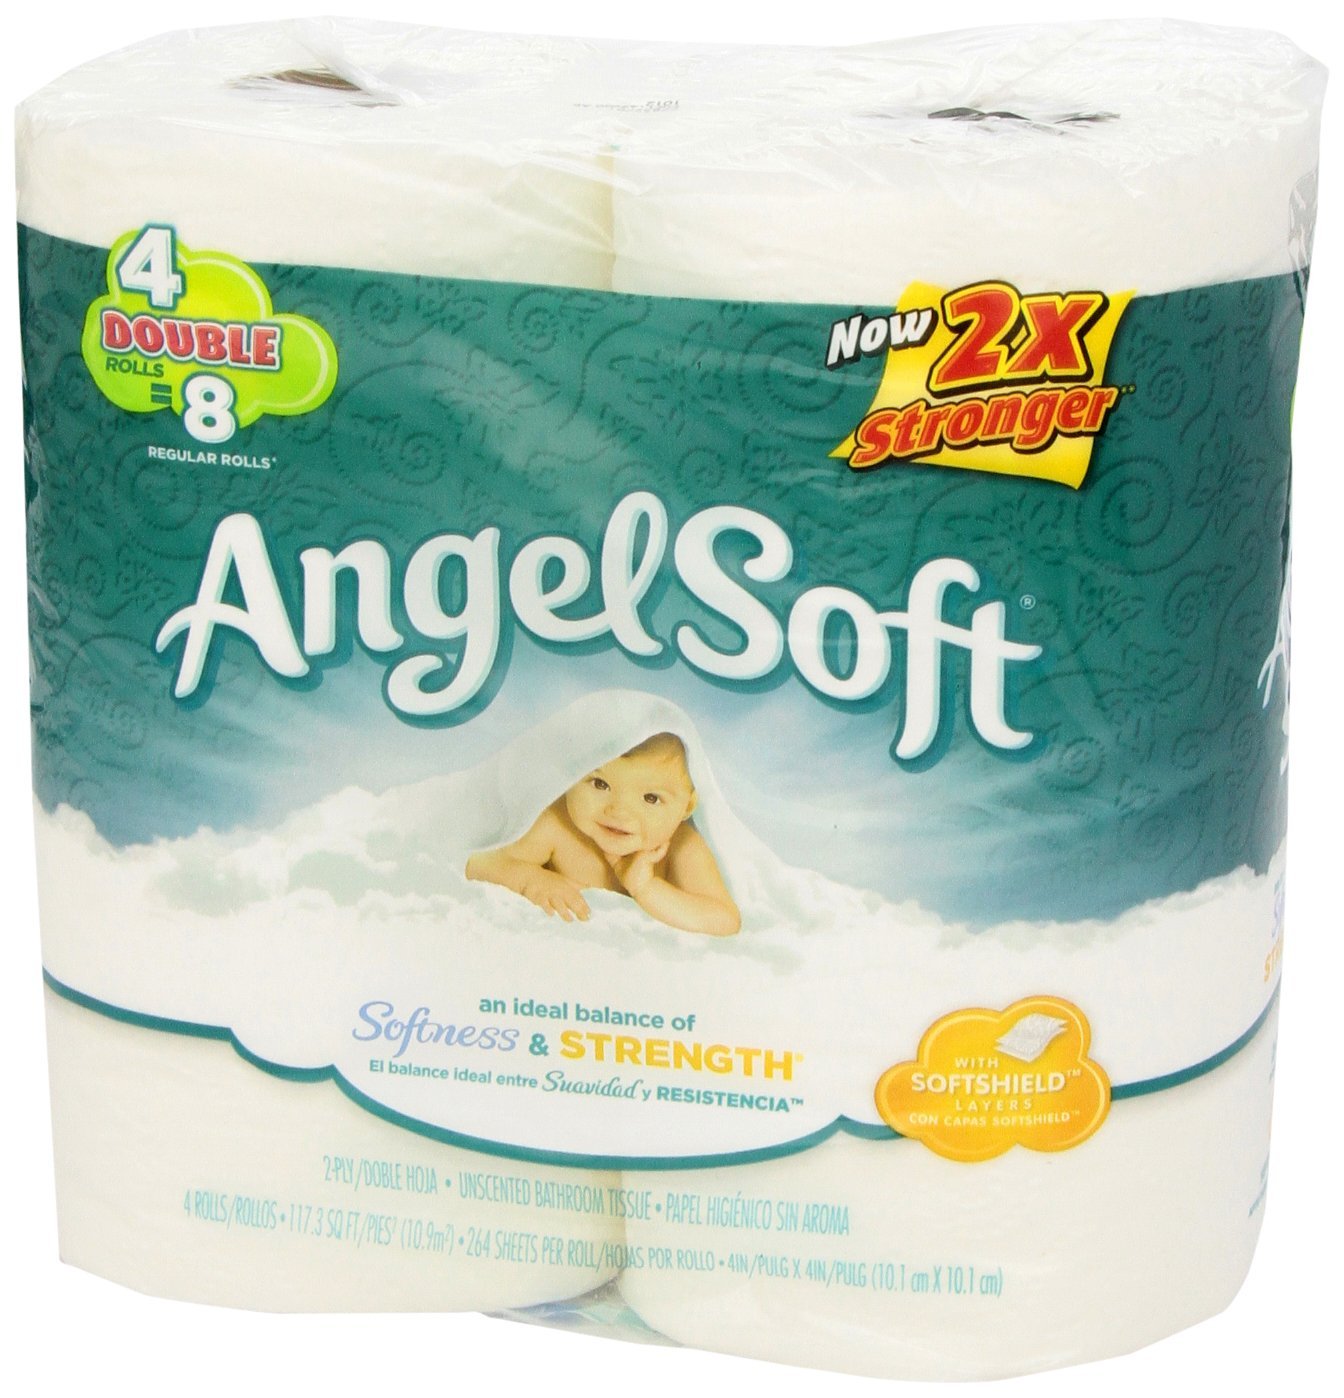 Get Angel Soft Bath Tissue for $1.12 at Publix - AddictedToSaving.com